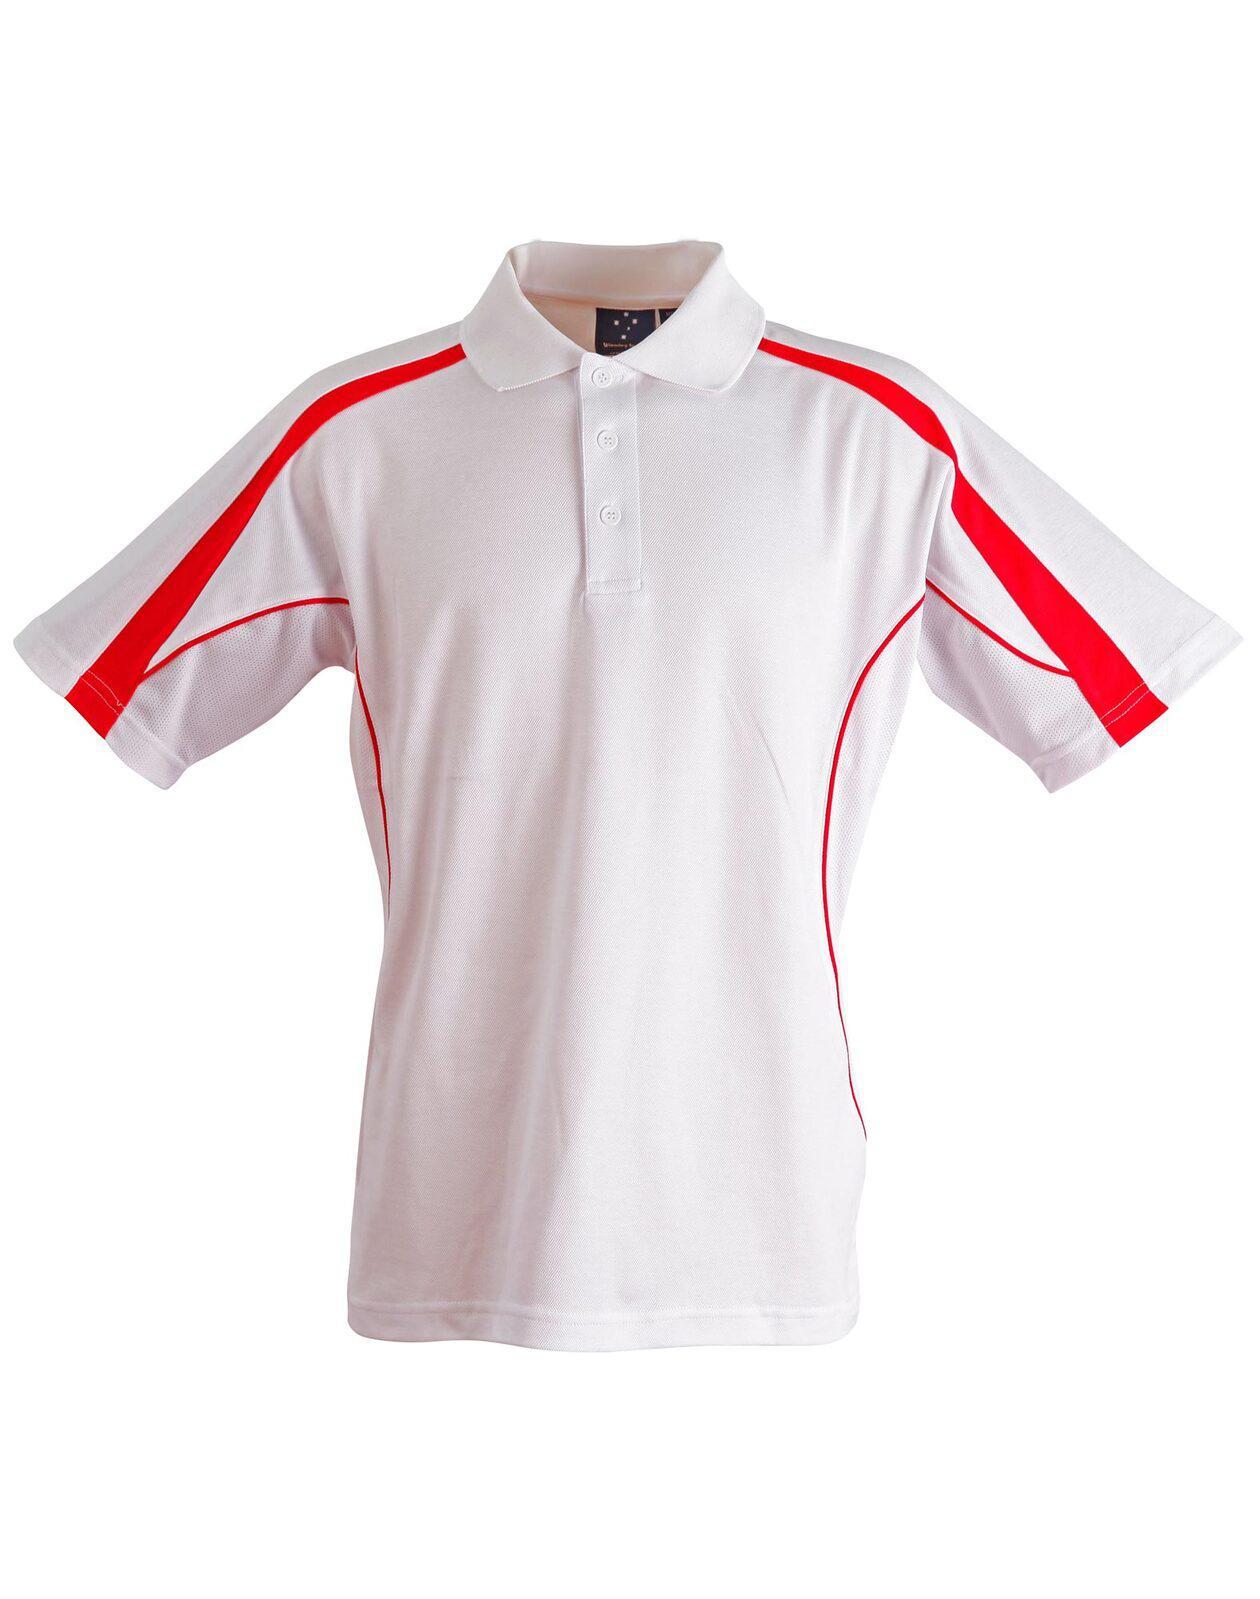 PS53 Sz 2XL LEGEND Polyester Cotton Men's Polo Shirt White/Red